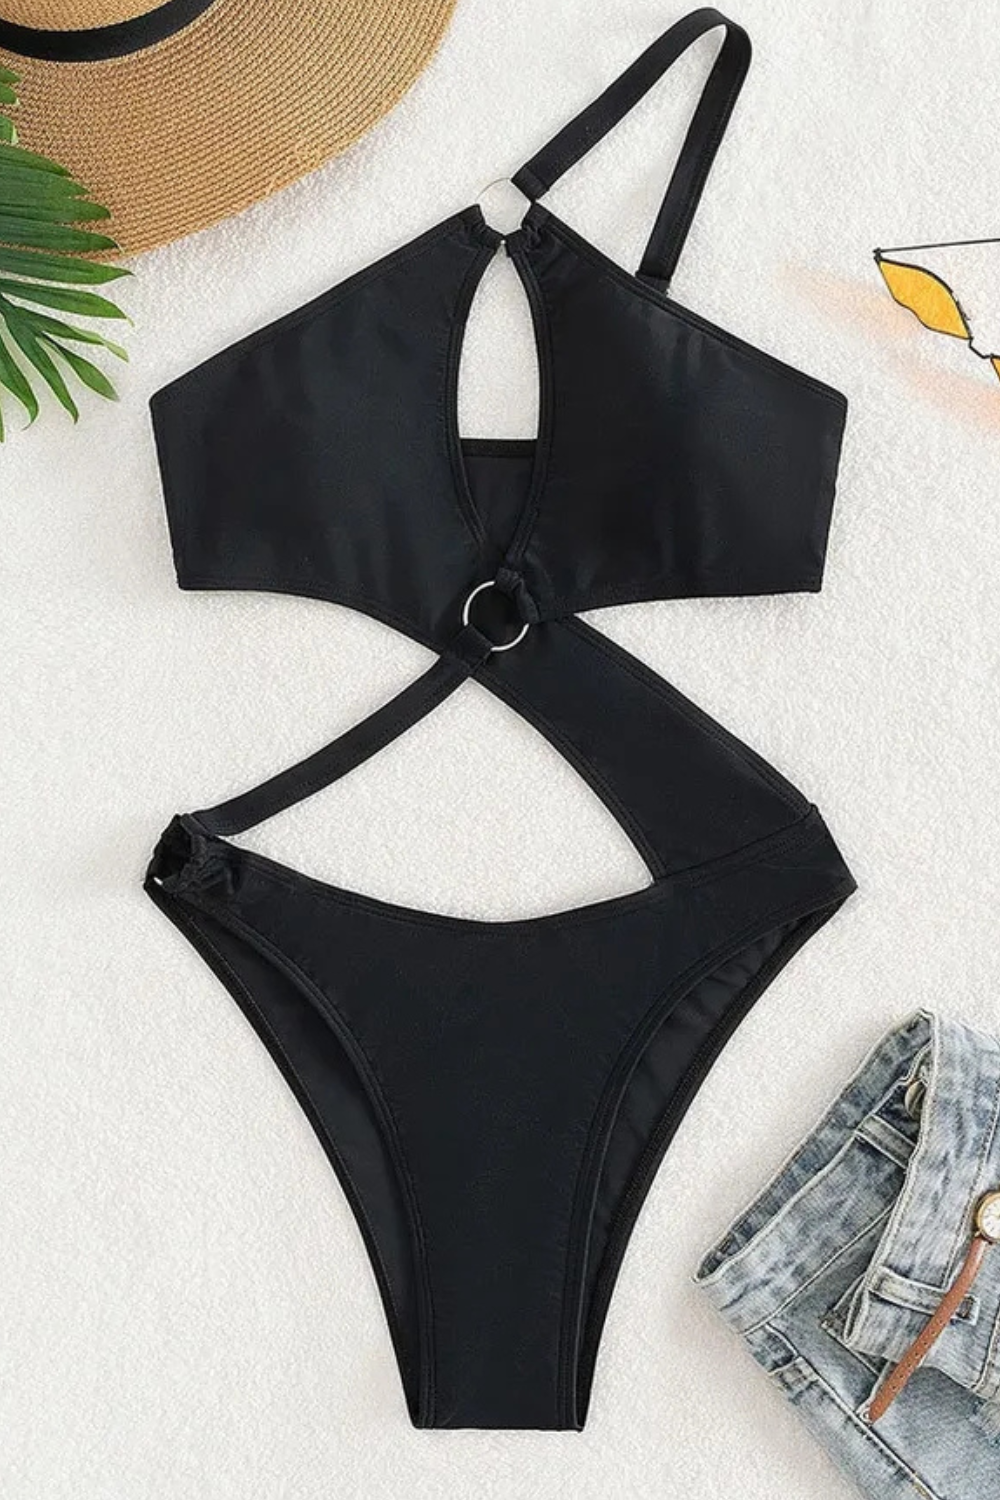 Miami Vice Swimsuit